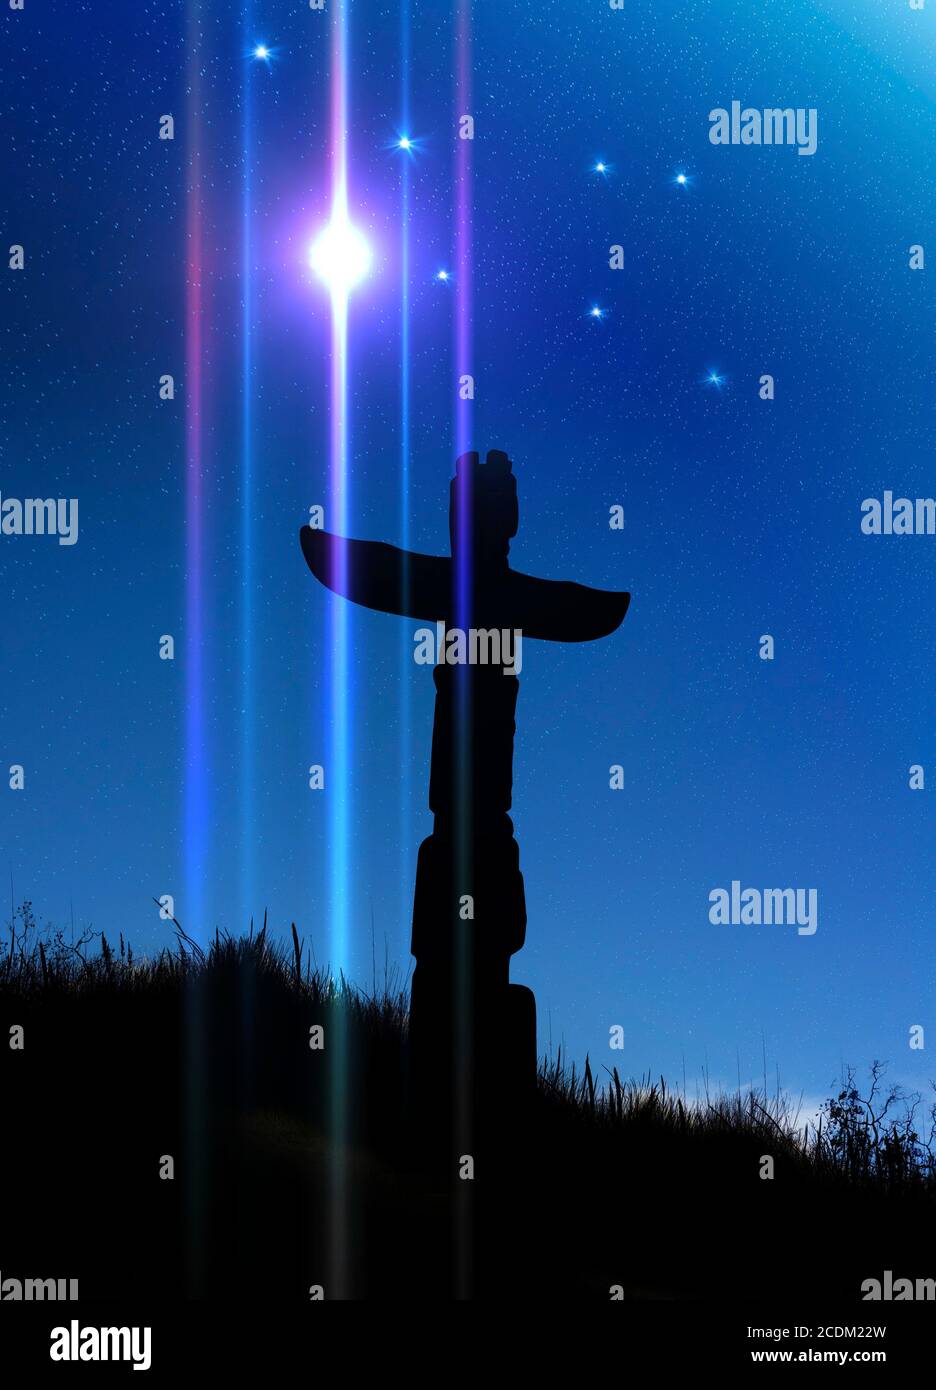 Totem pole and constellation, illustration. Stock Photo